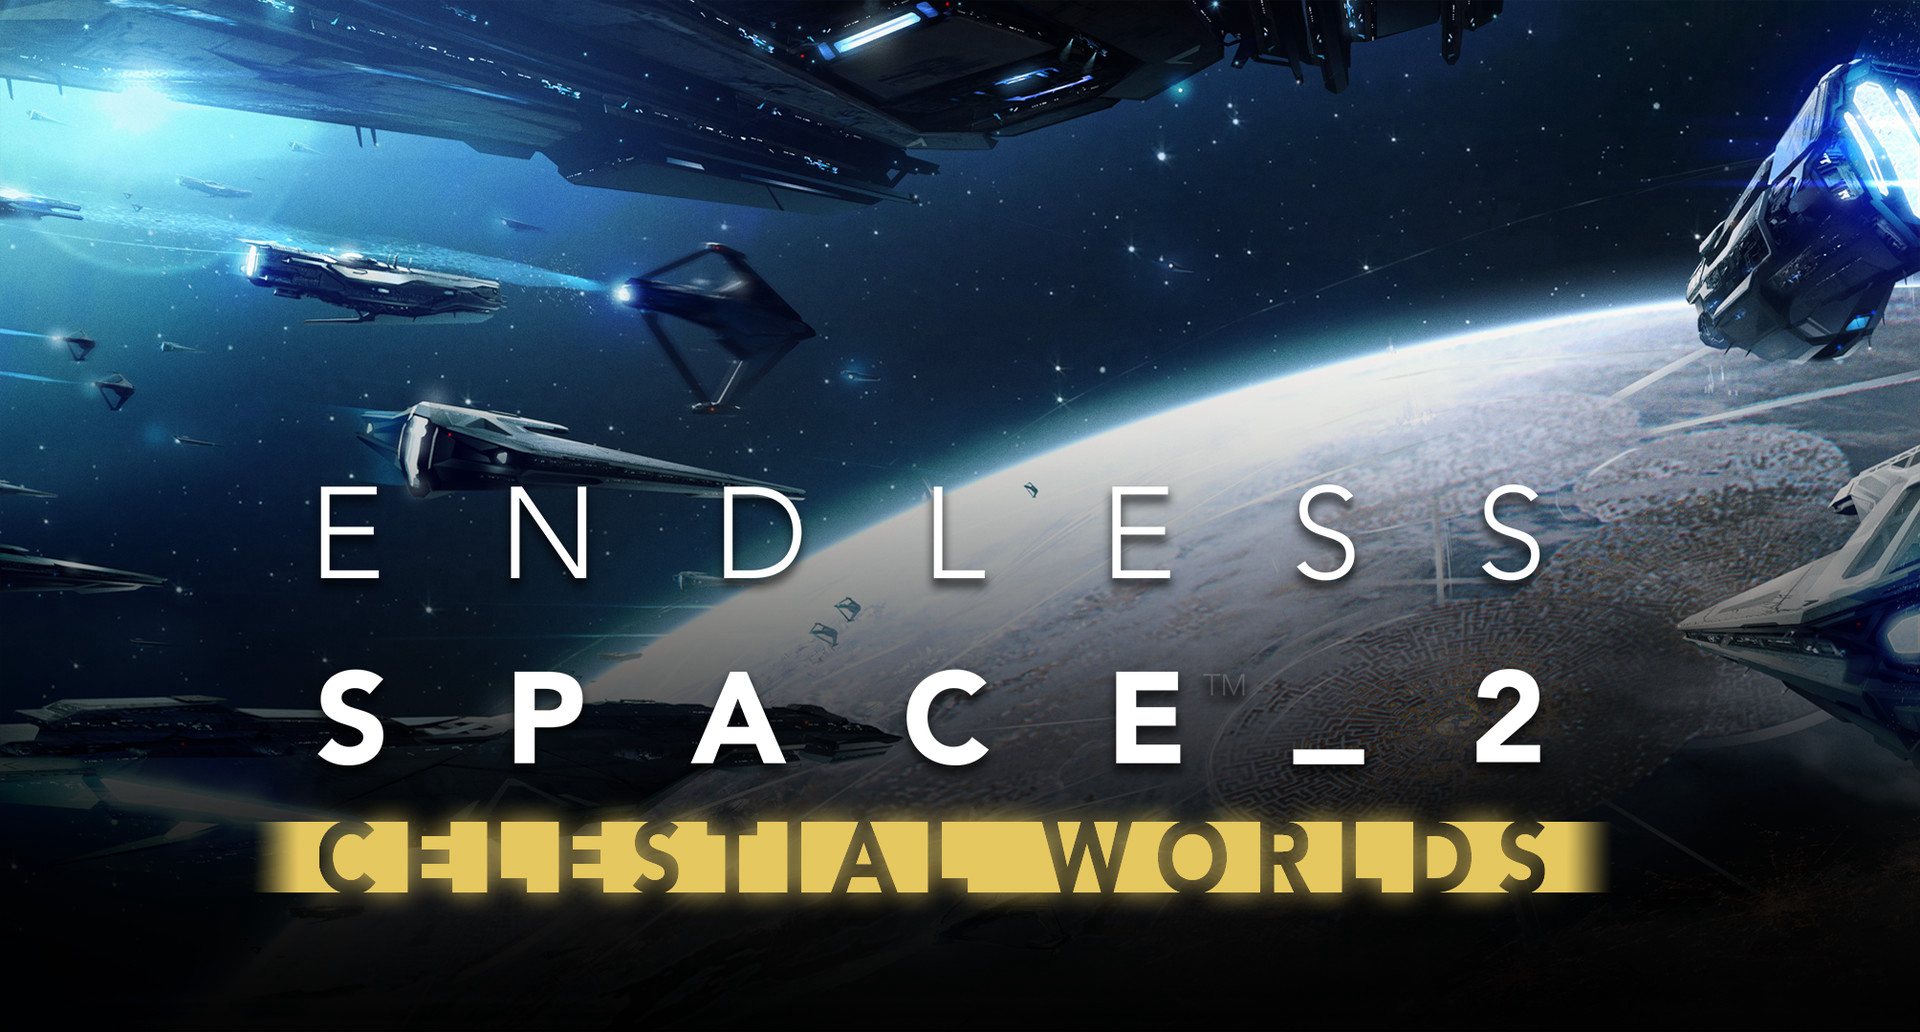 Endless Space 2 - Celestial Worlds DLC Steam CD Key $2.2